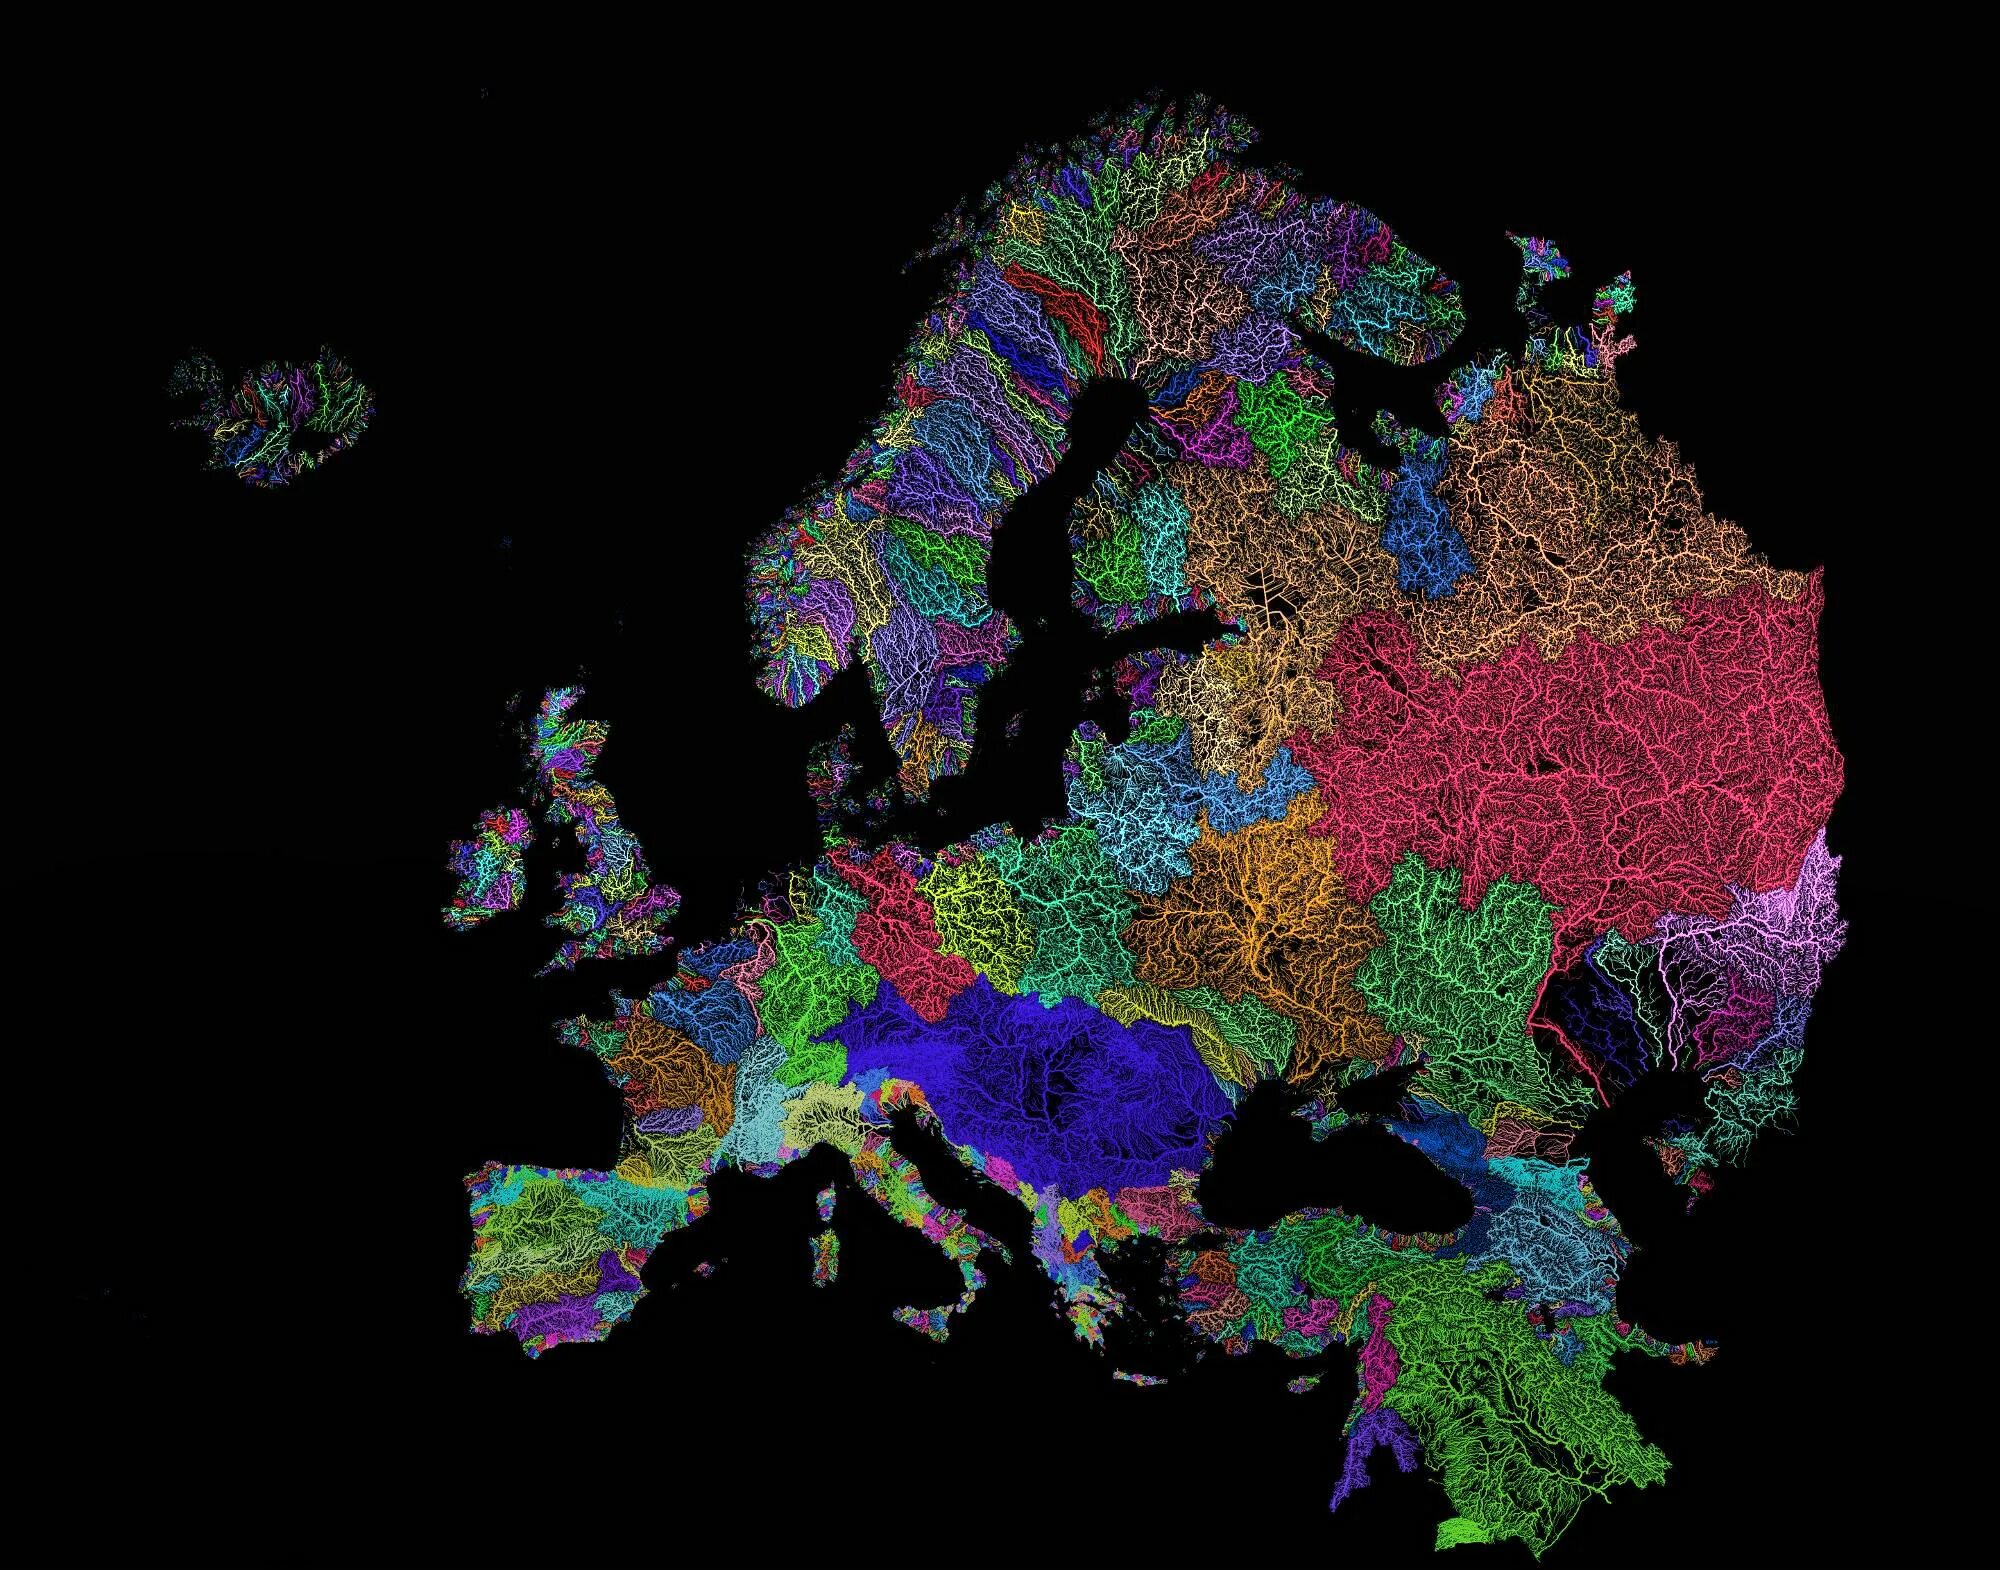 Maps for mapping. Бассейны рек Европы. Карта речных бассейнов Европы. Карта - Европа. Бассейны рек Европы на карте.